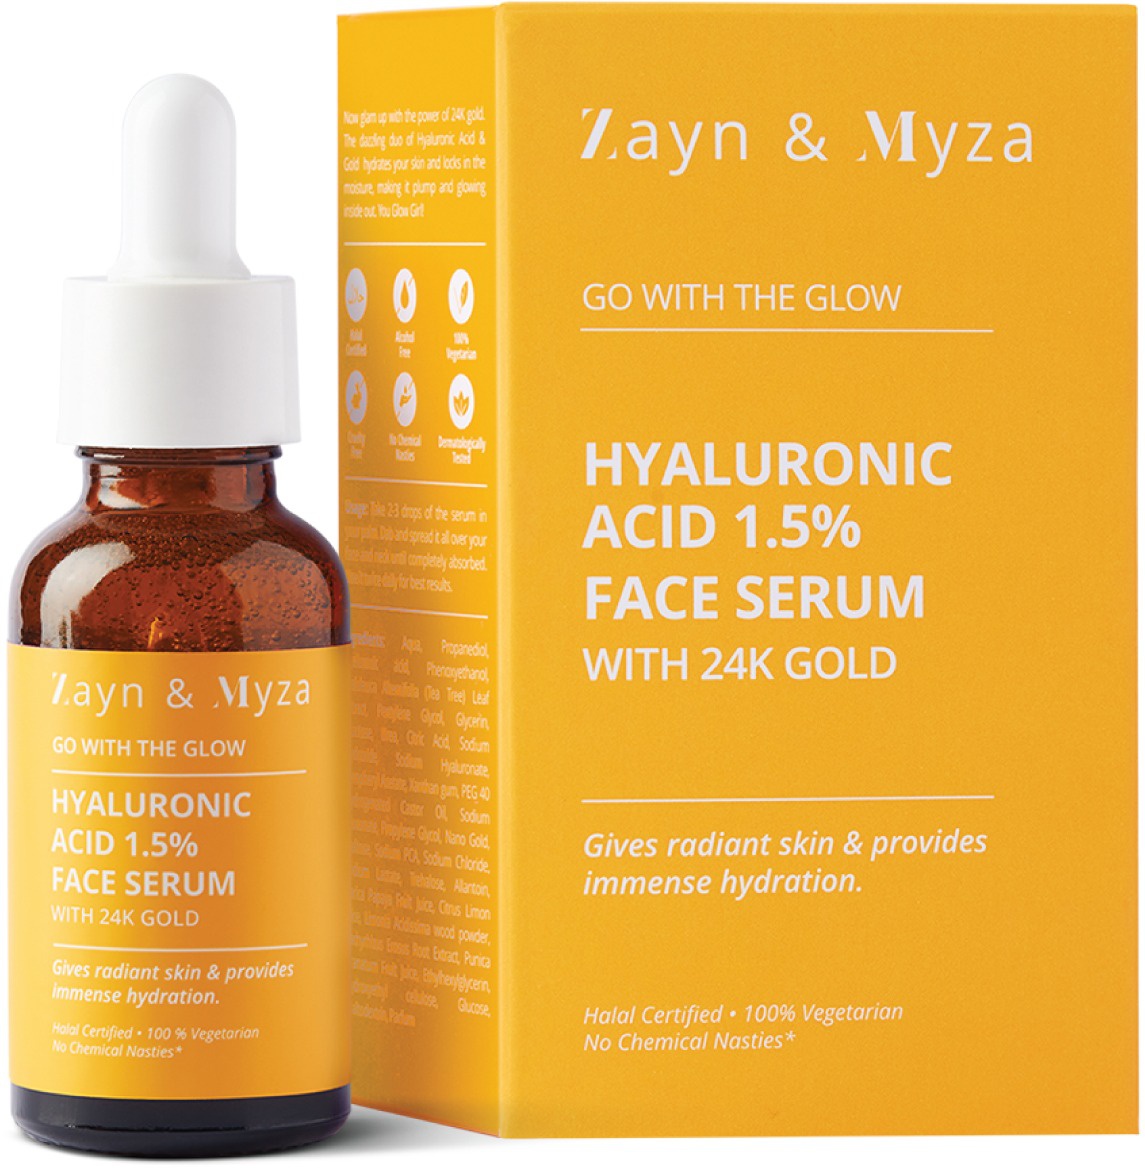 Zayn & Myza Hyaluronic Acid 1.5% Face Serum